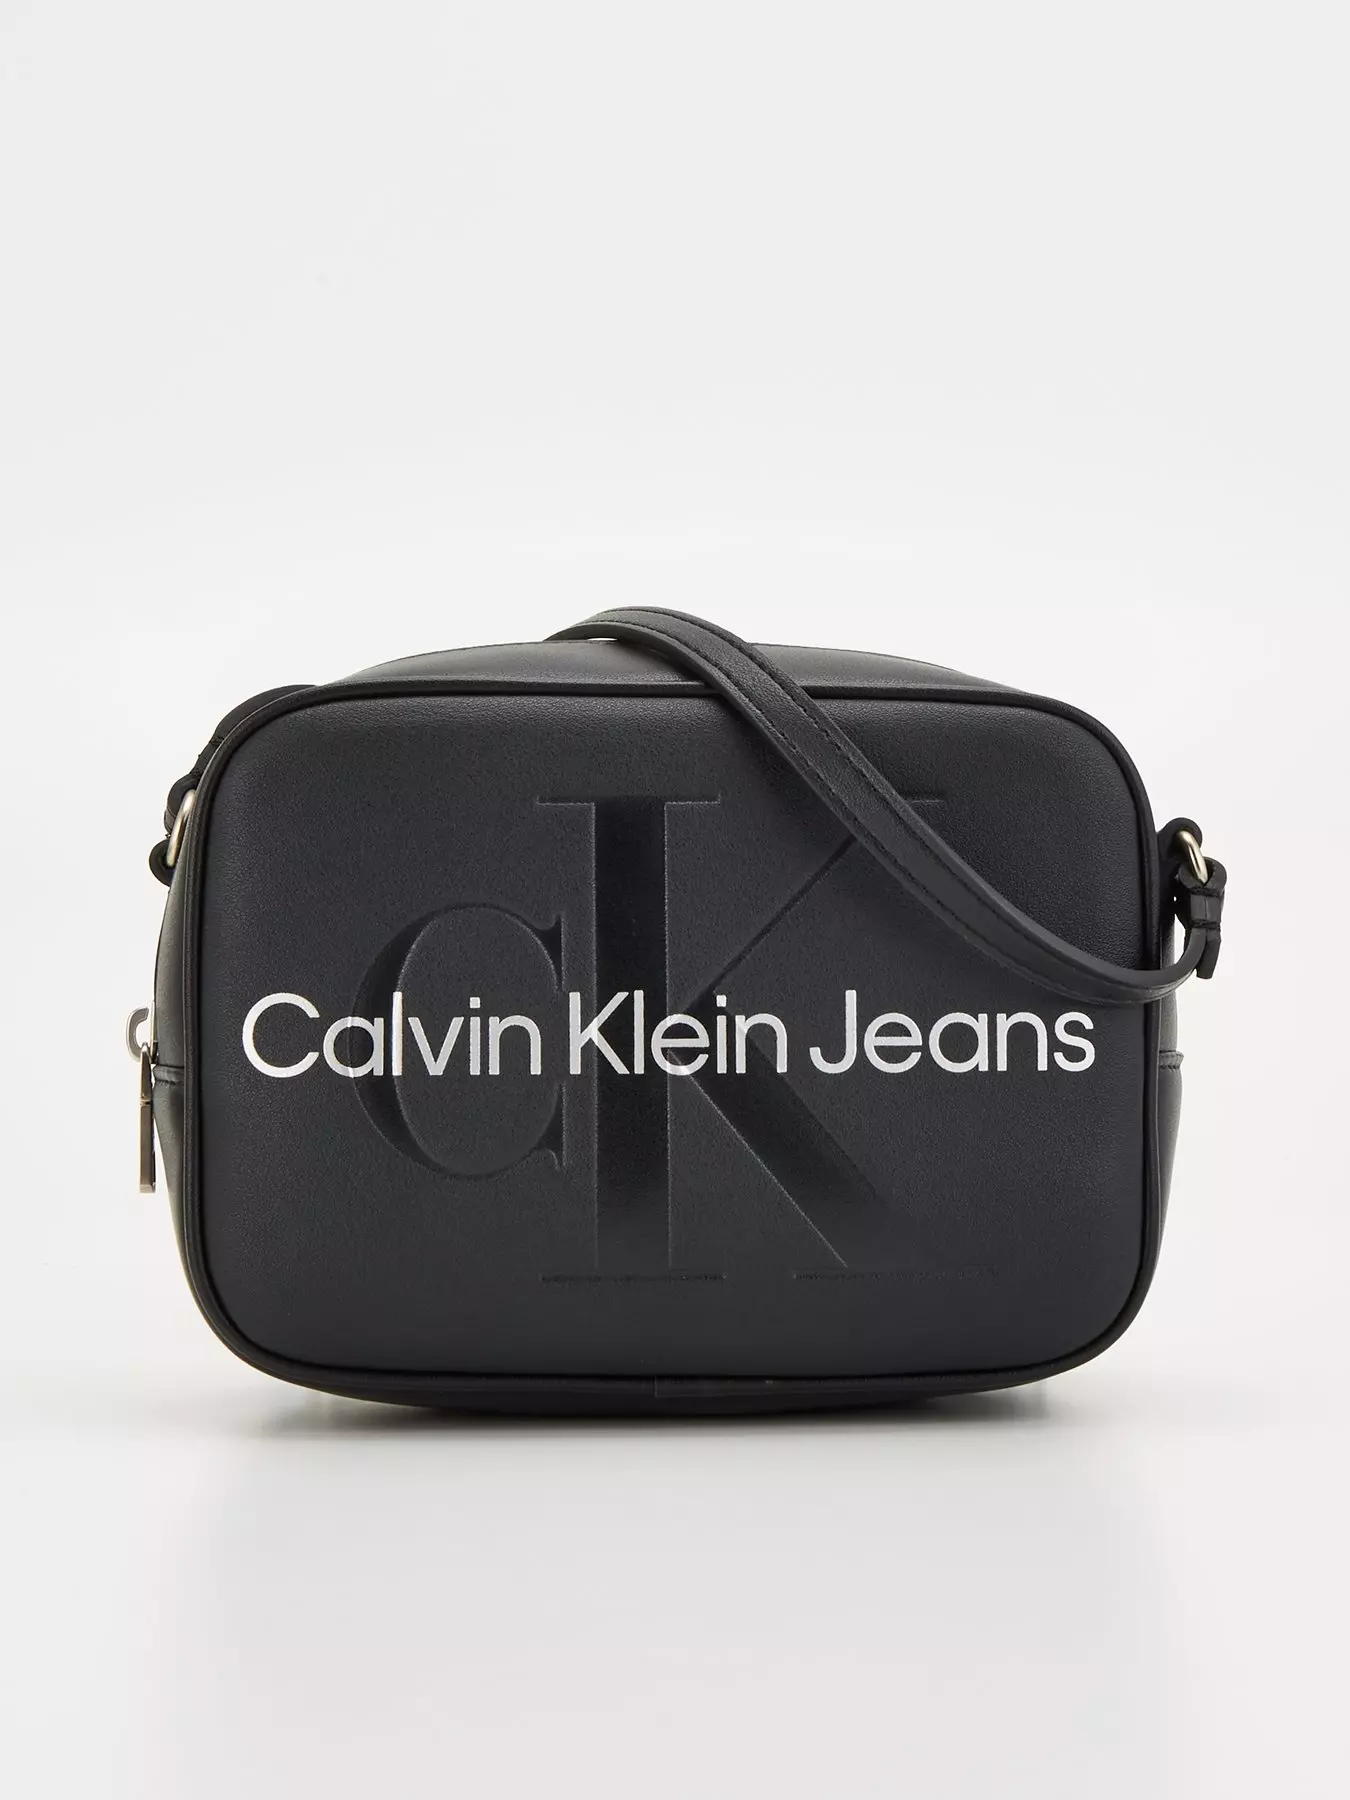 CALVIN KLEIN JEANS - Women's essential shoulder bag with metal monogram 